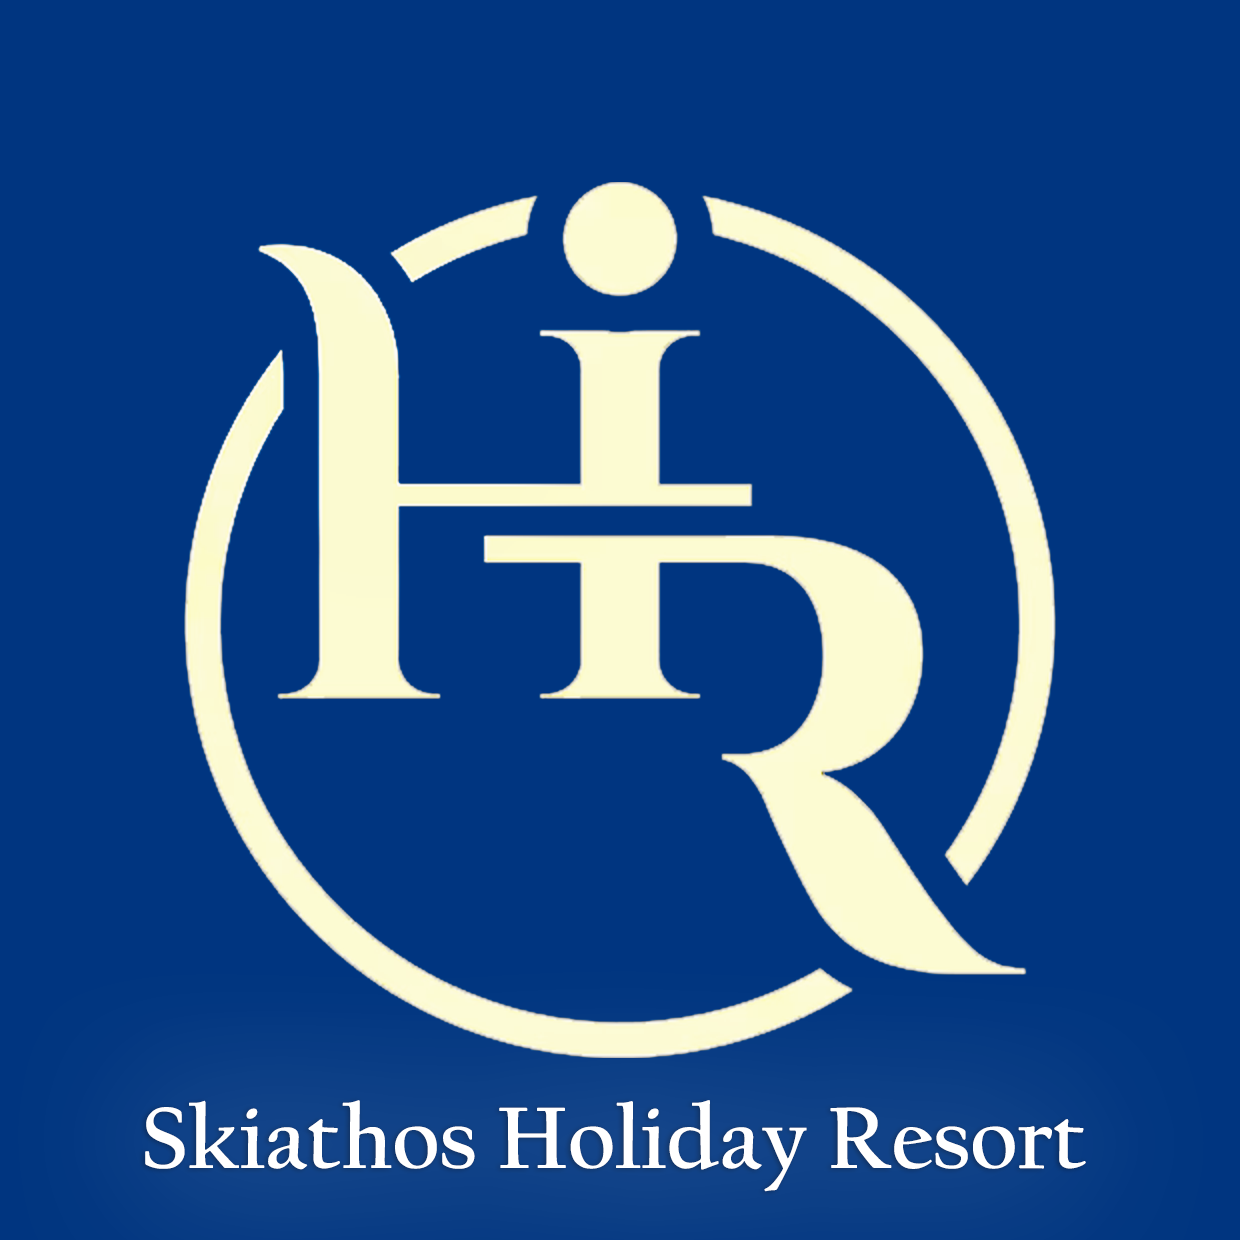 Skiathos Holiday Resort | My account - Skiathos Holiday Resort